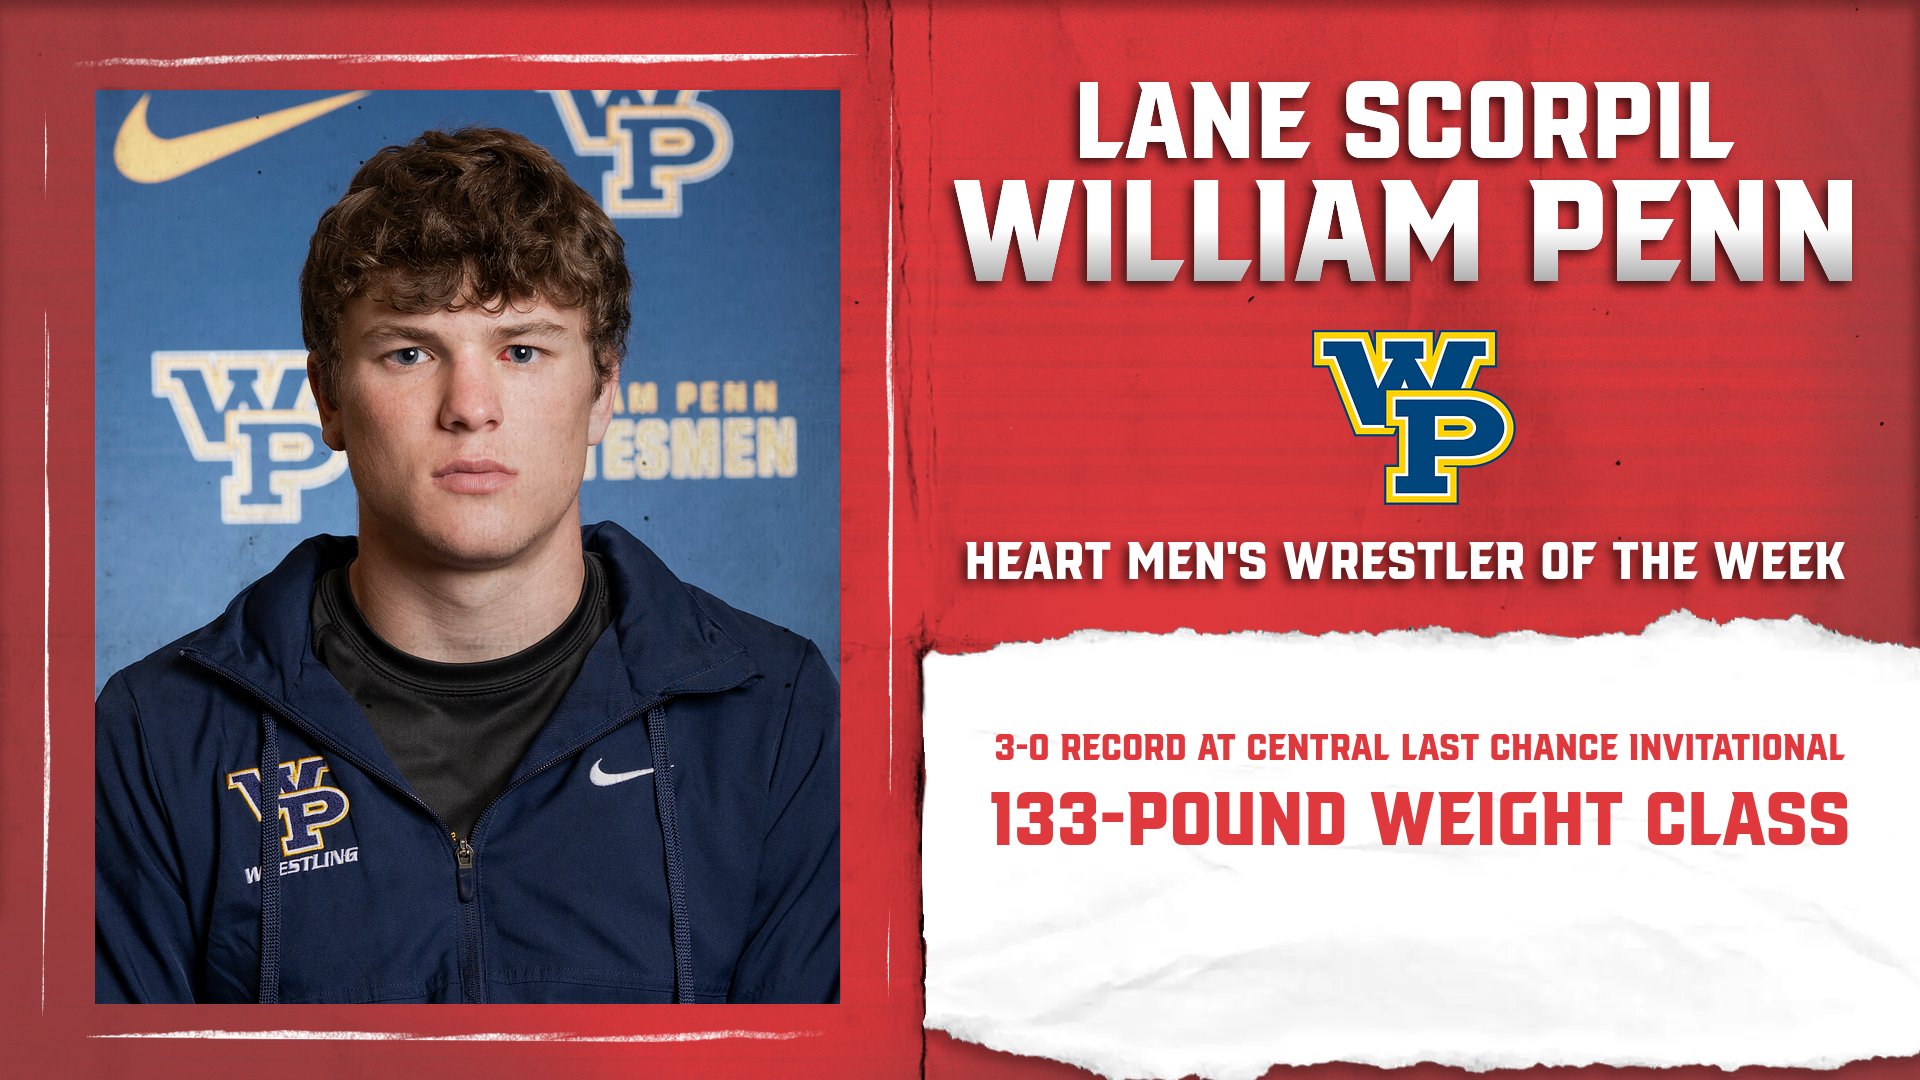 Lane Scorpil of William Penn Garners Heart Men’s Wrestler of the Week